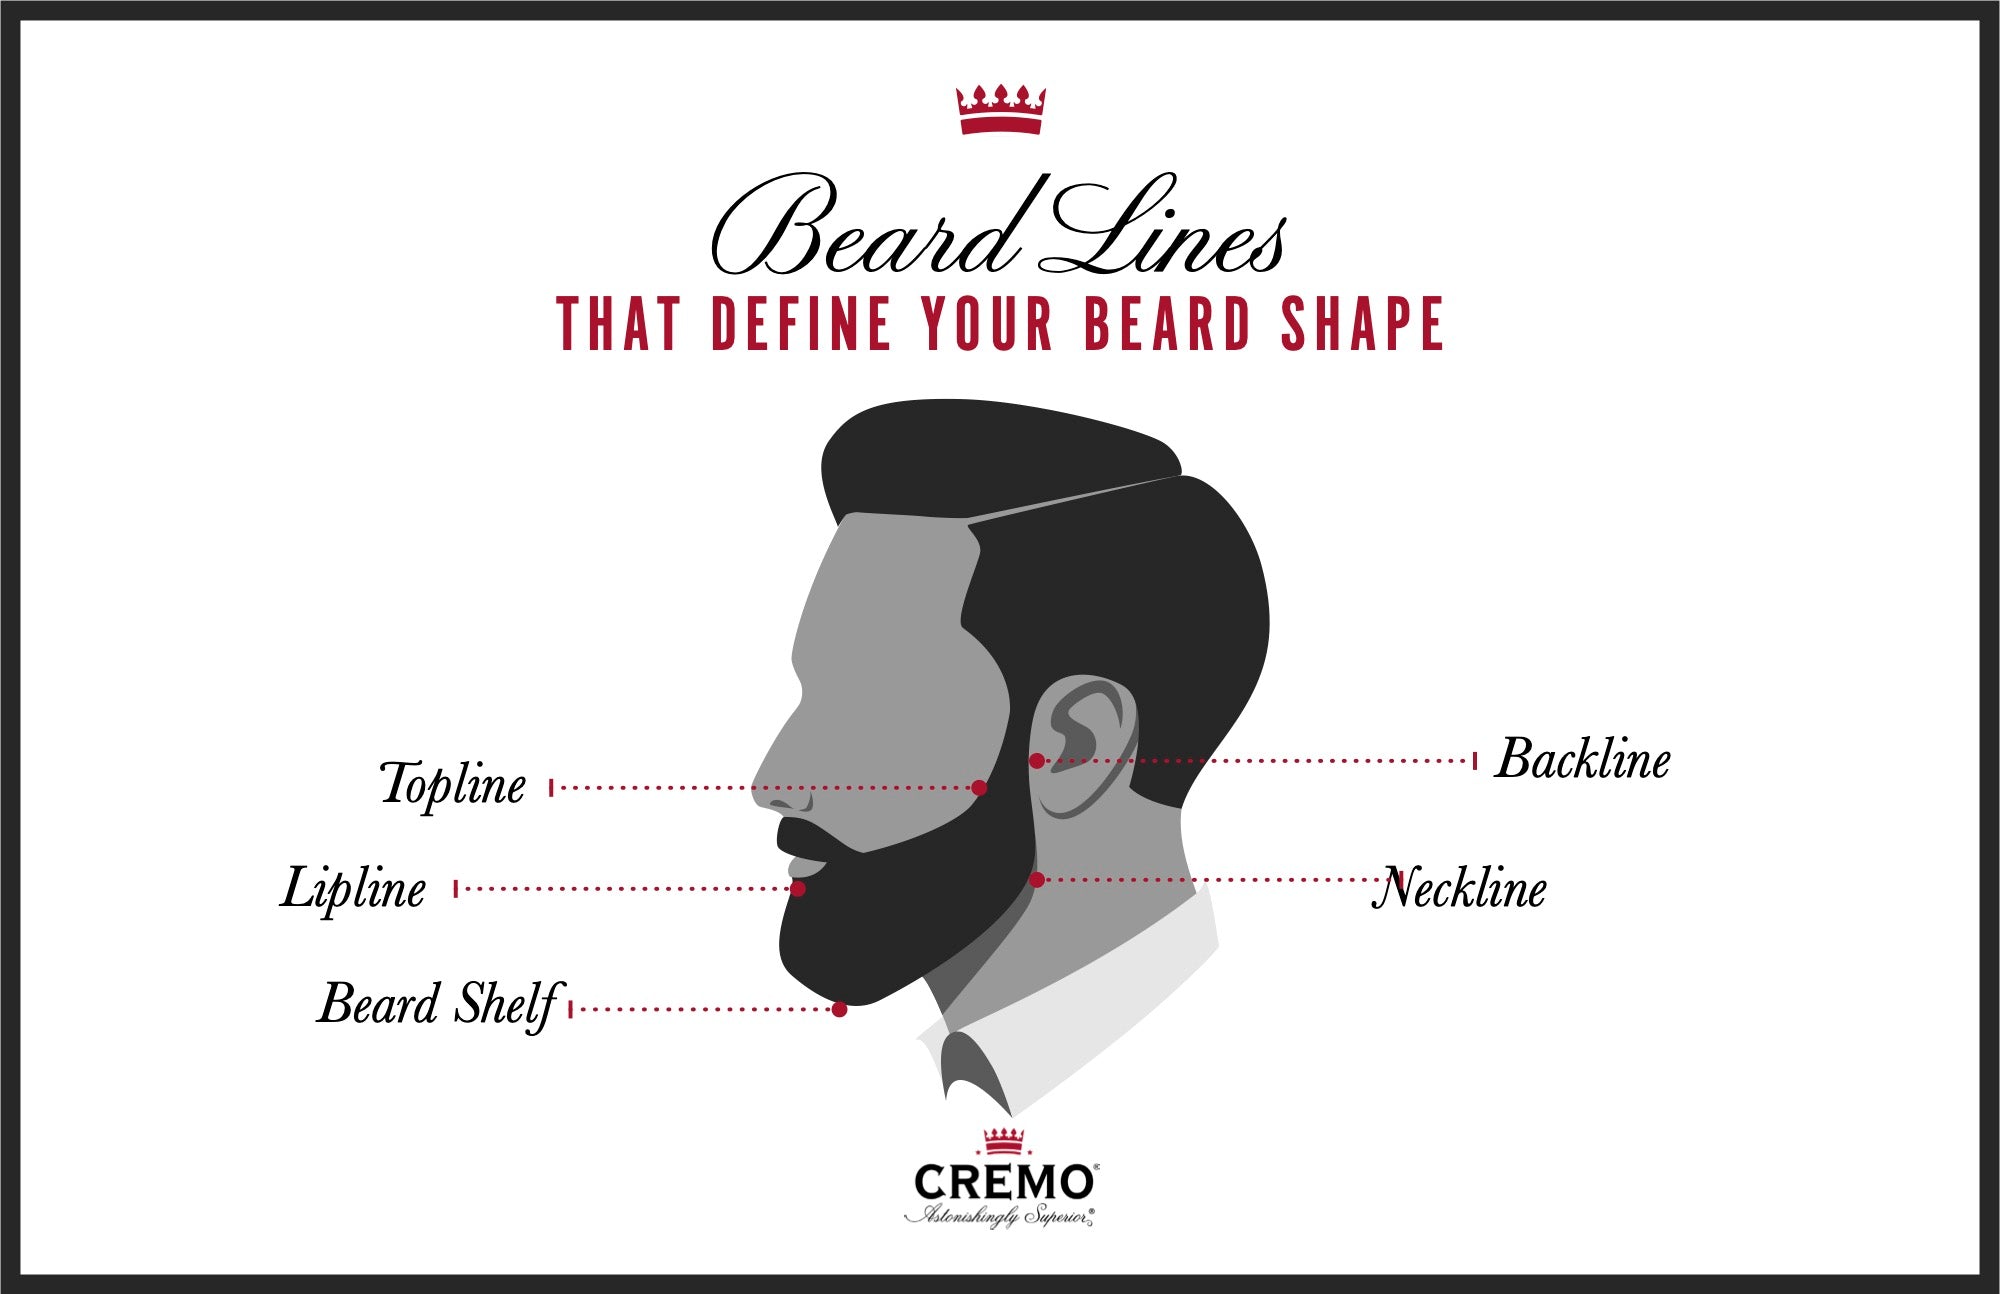 Beard Lines that define beard